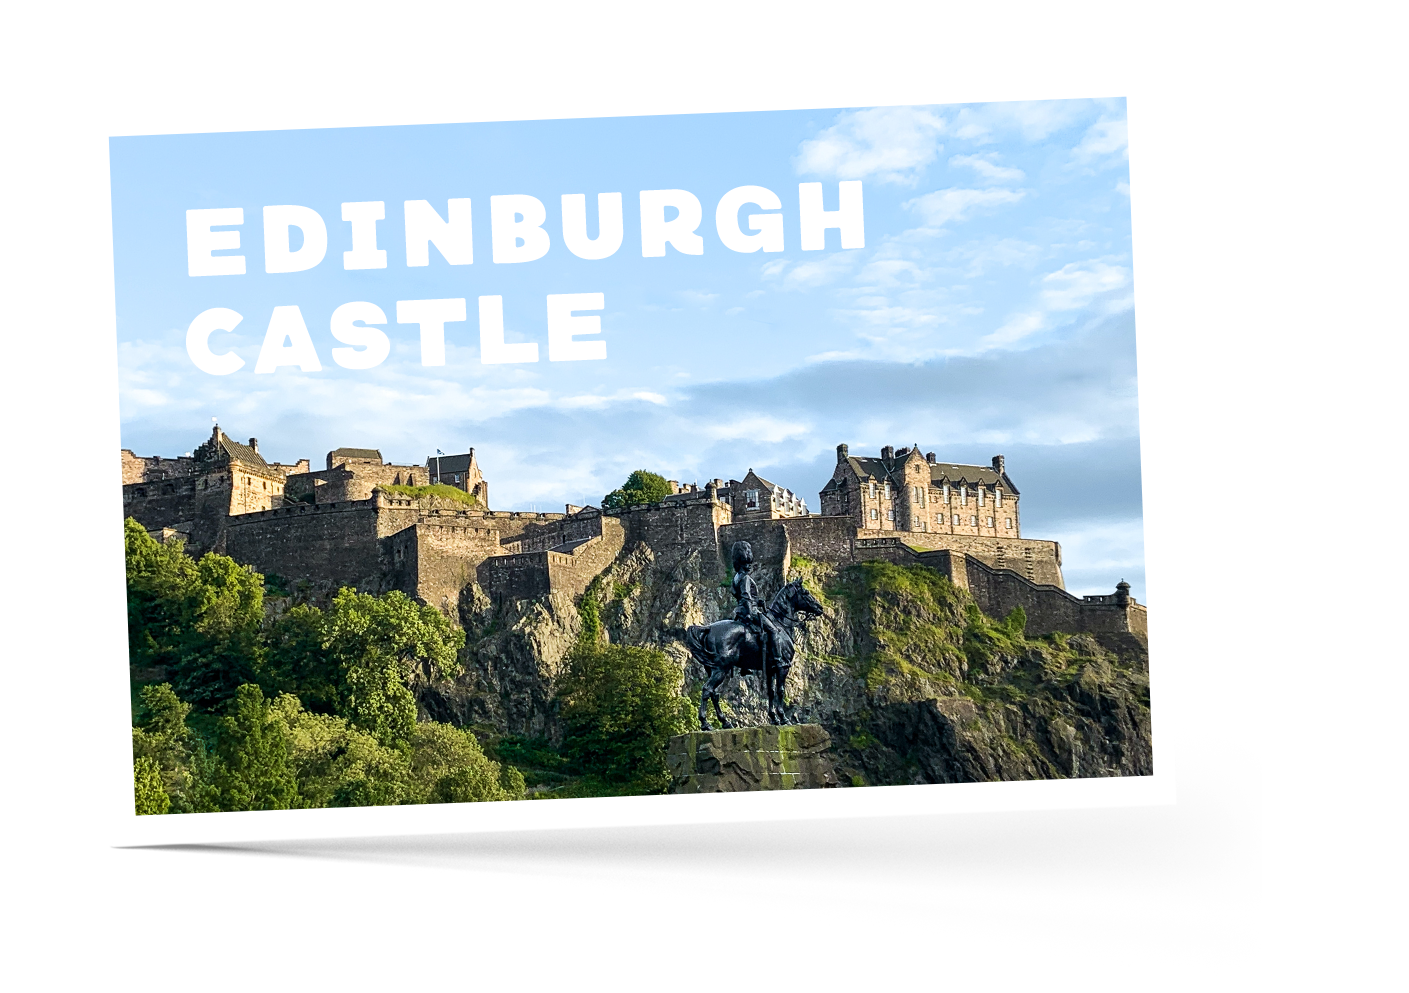 Panoramic view of Edinburgh Castle